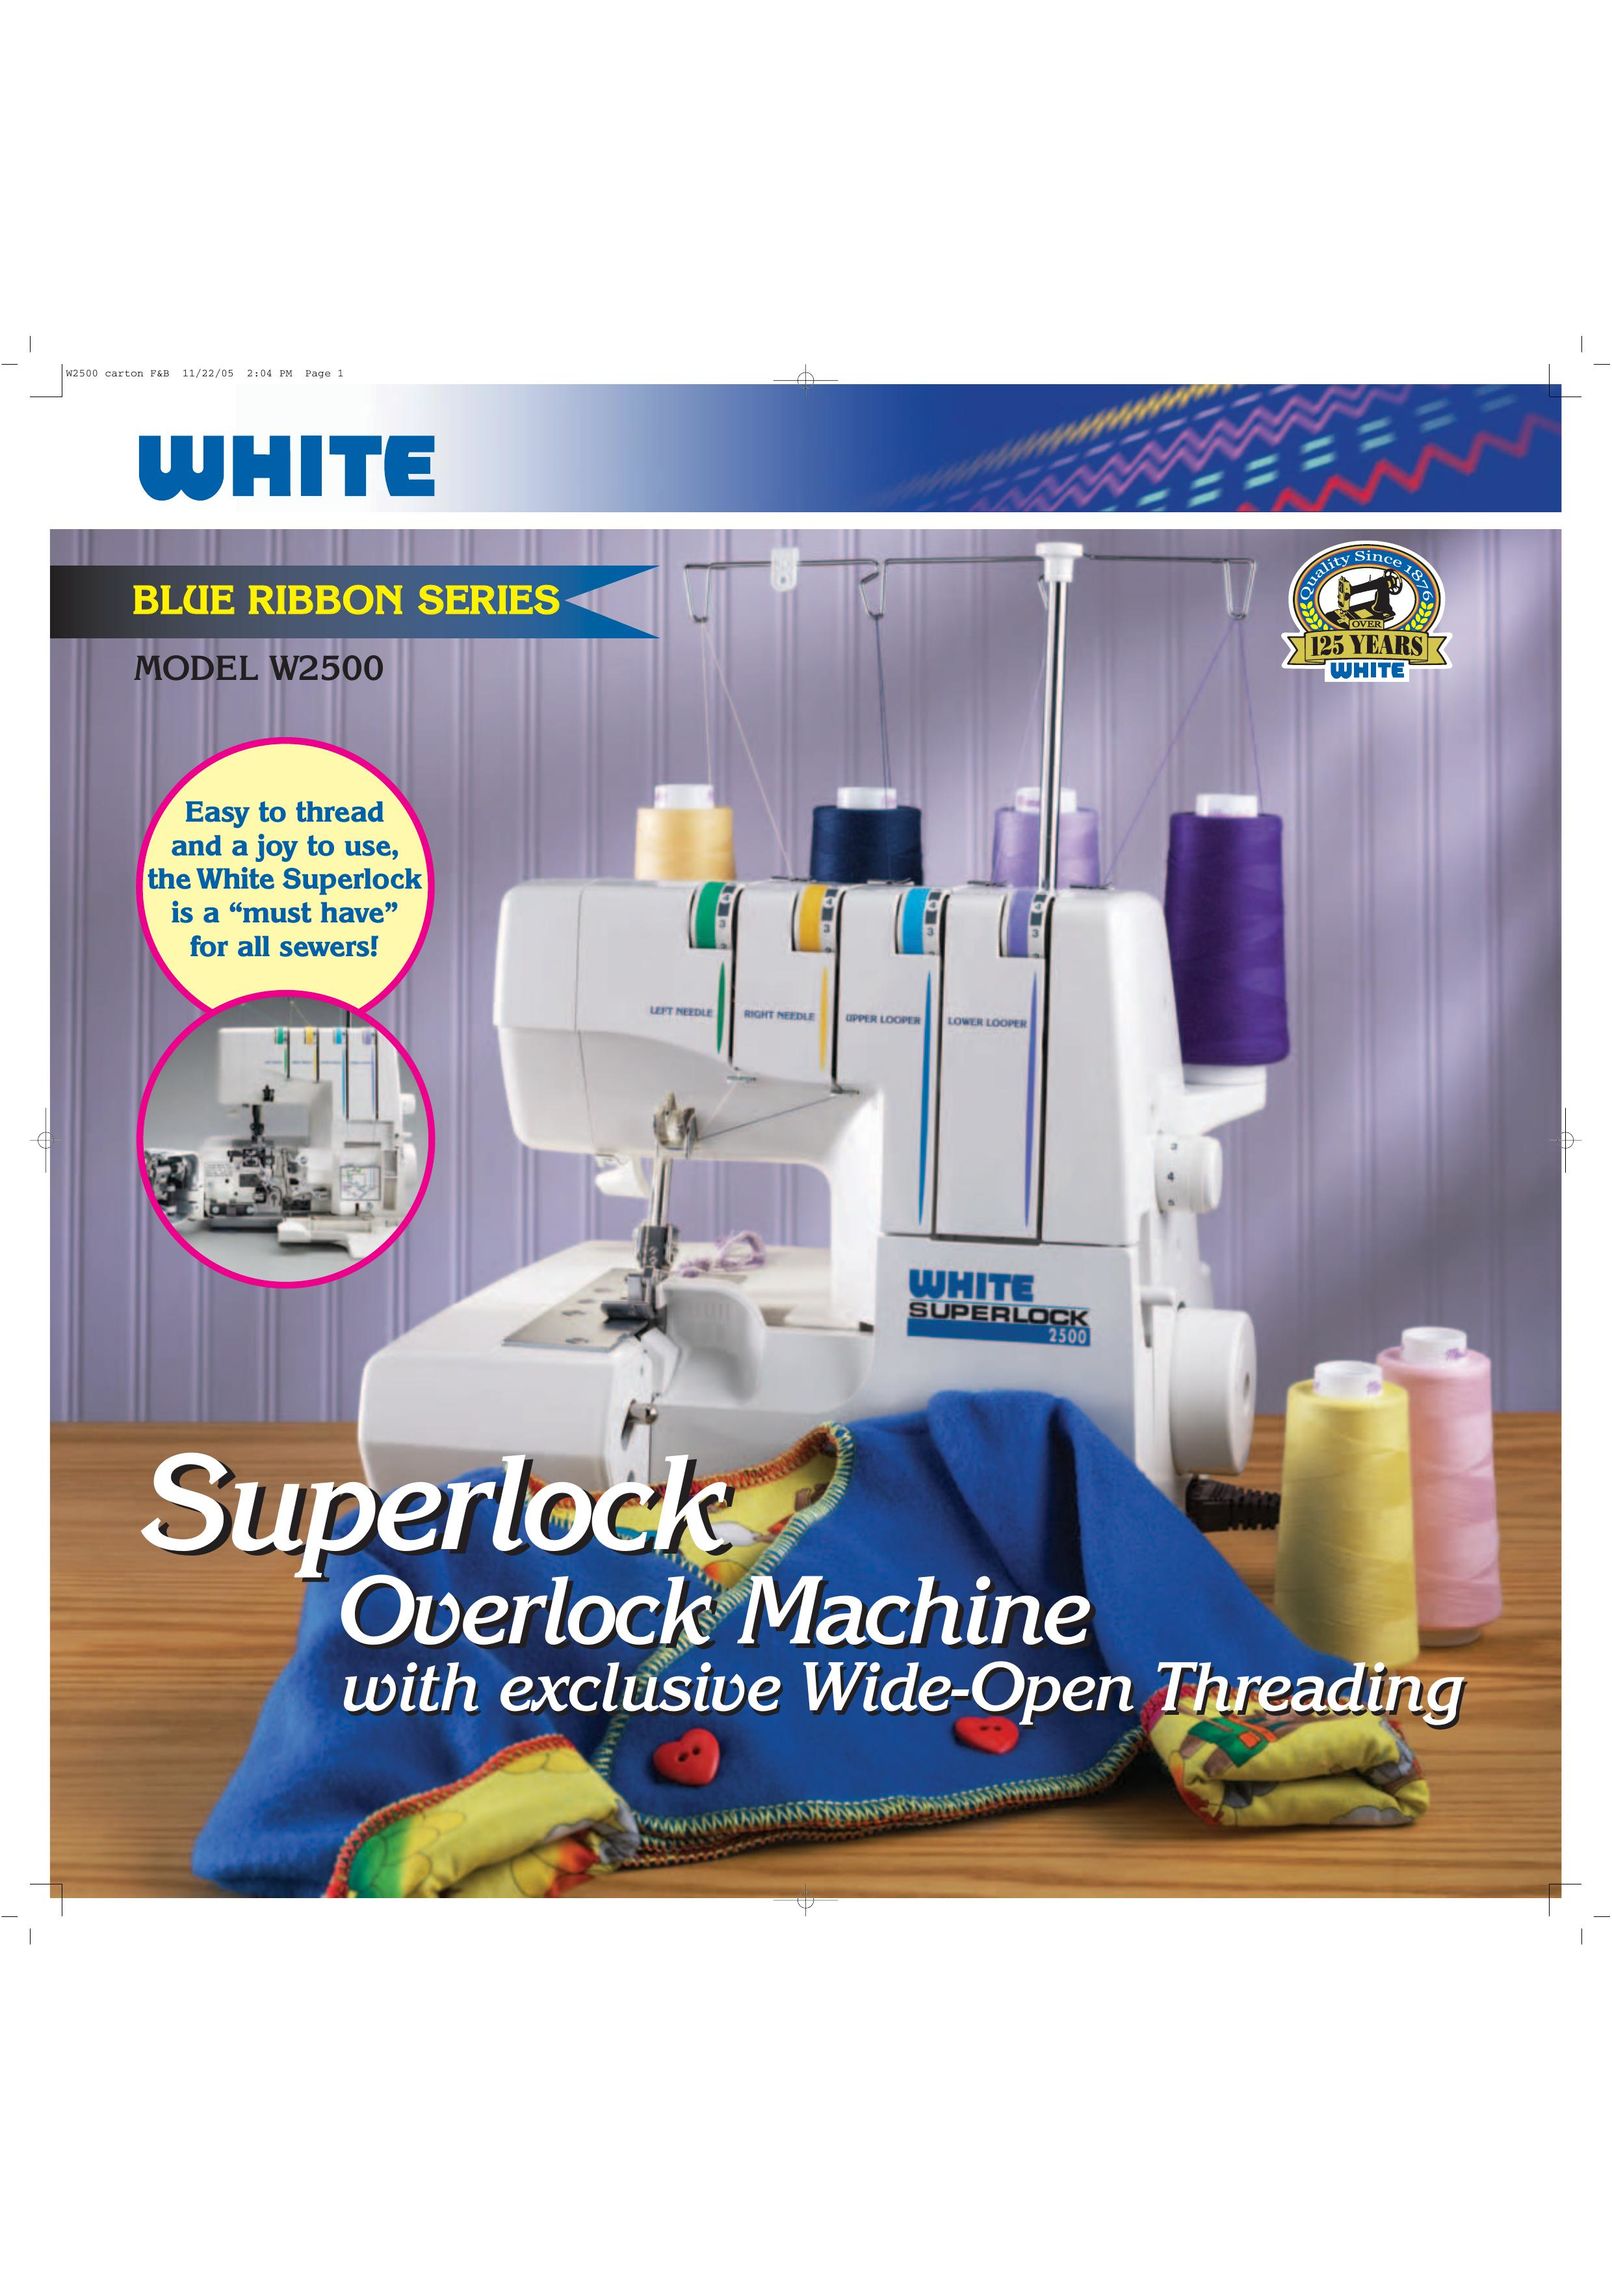 White W2500 Sewing Machine User Manual